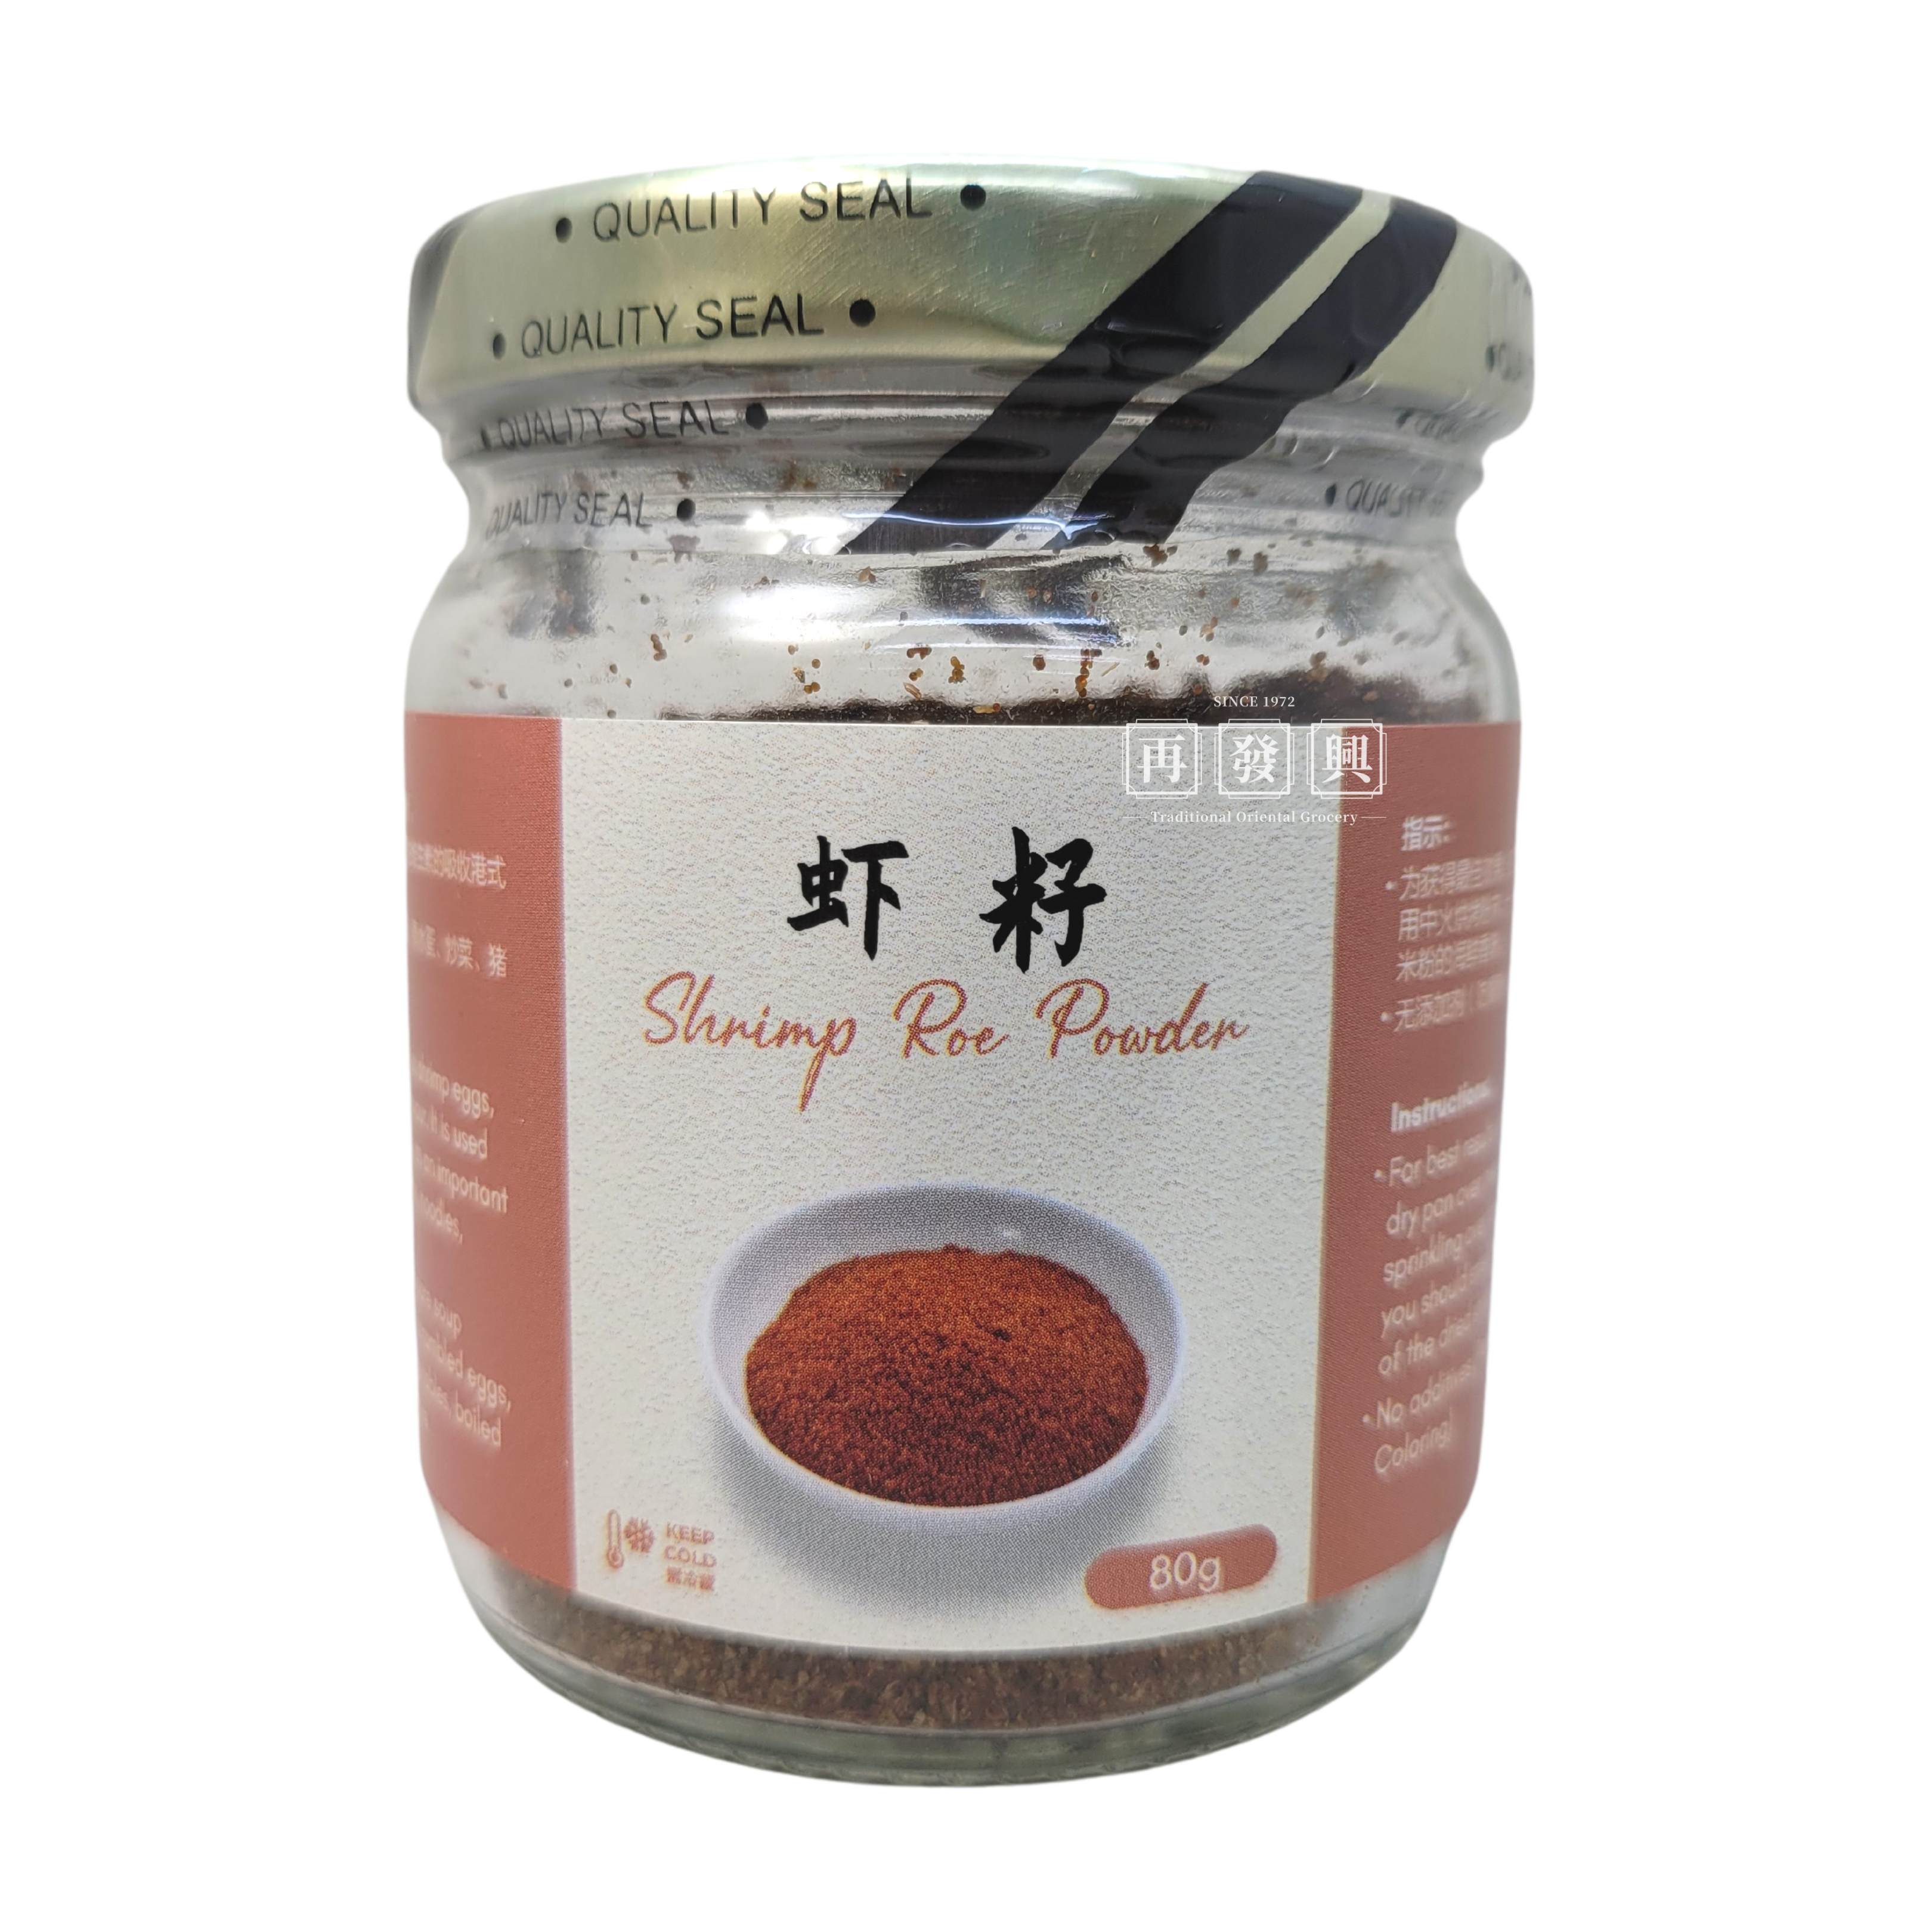 Shrimp Roe Powder 虾籽粉 80g